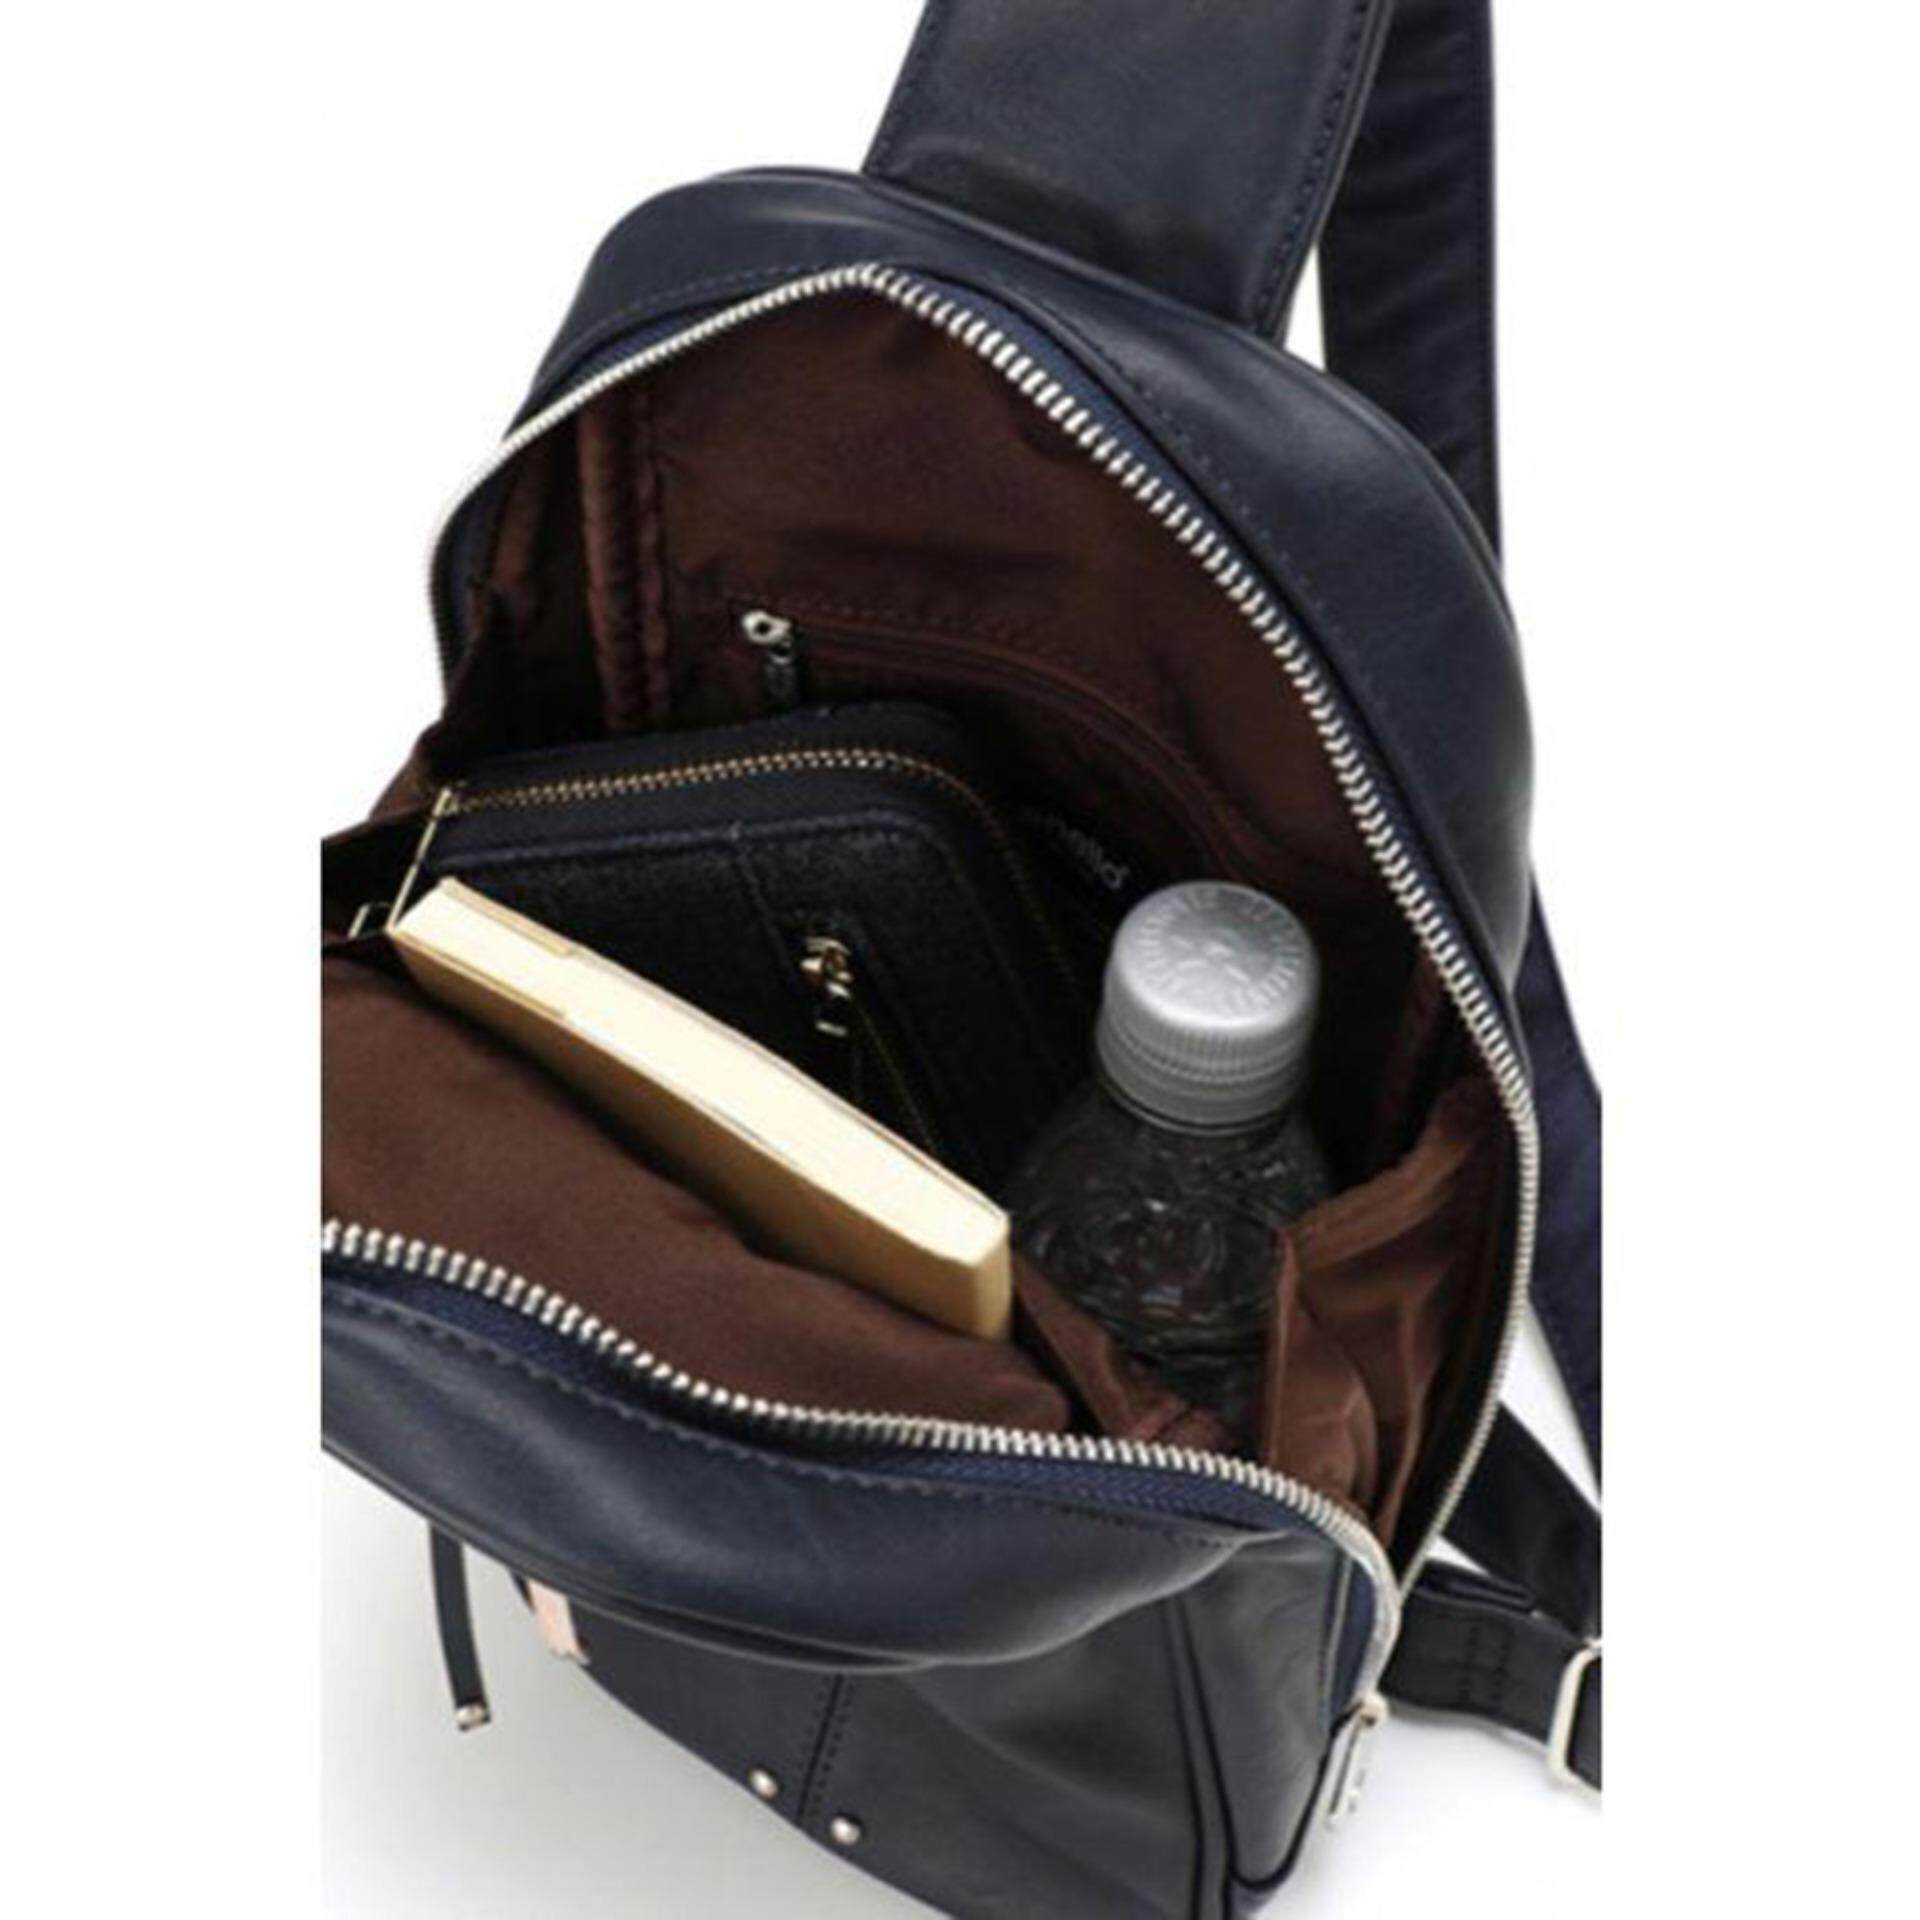 anello กระเป๋าสะพายข้าง size Mini รุ่น PREMIUM CLASP AU-B1515-NV